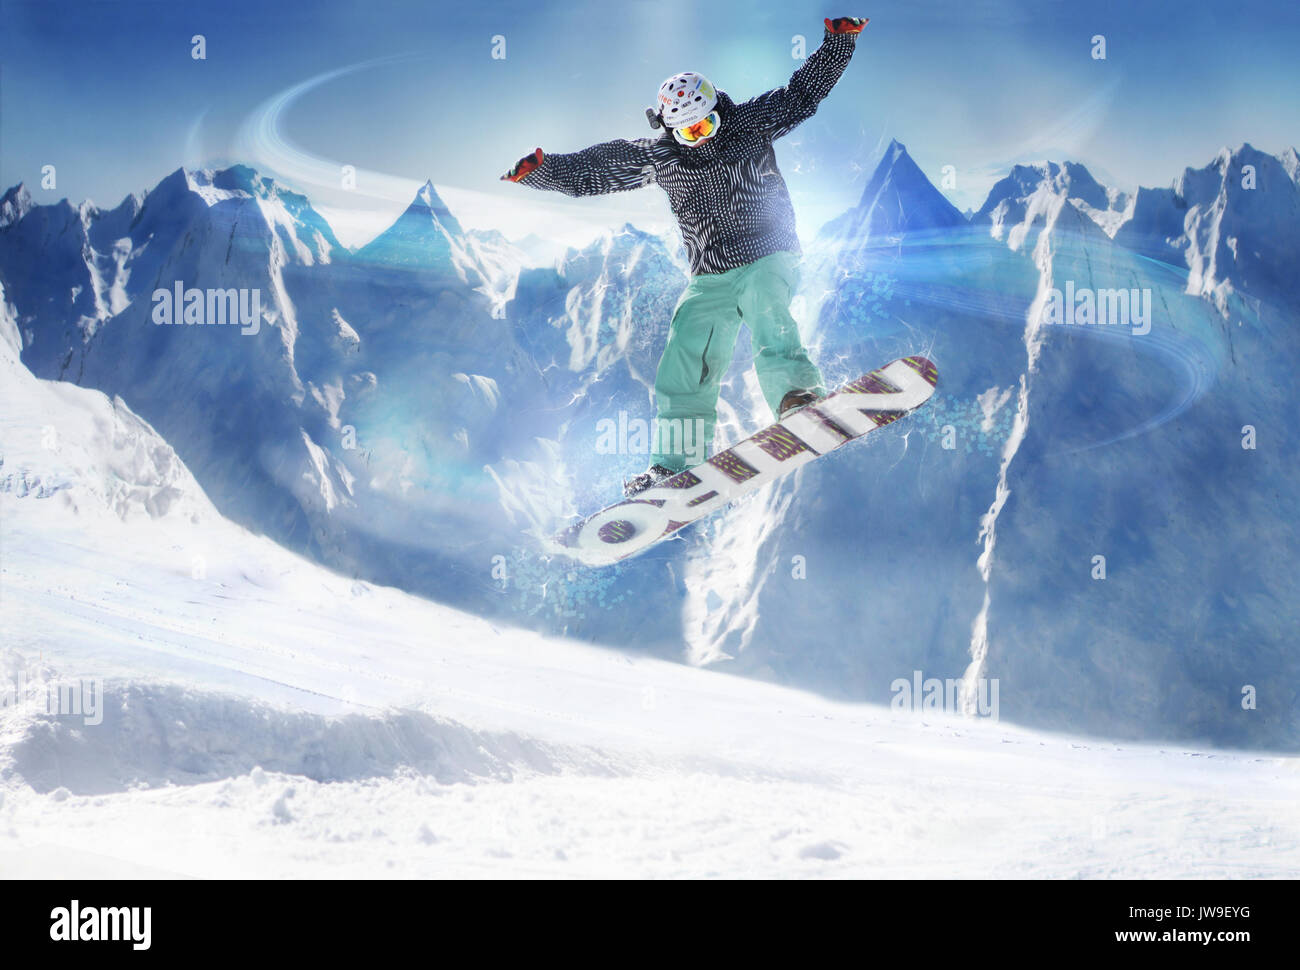 Europa, Swizz, Alpes, Aktion en los Alpes - snowboarder saltar con motion blur - Arte de Photoshop Foto de stock